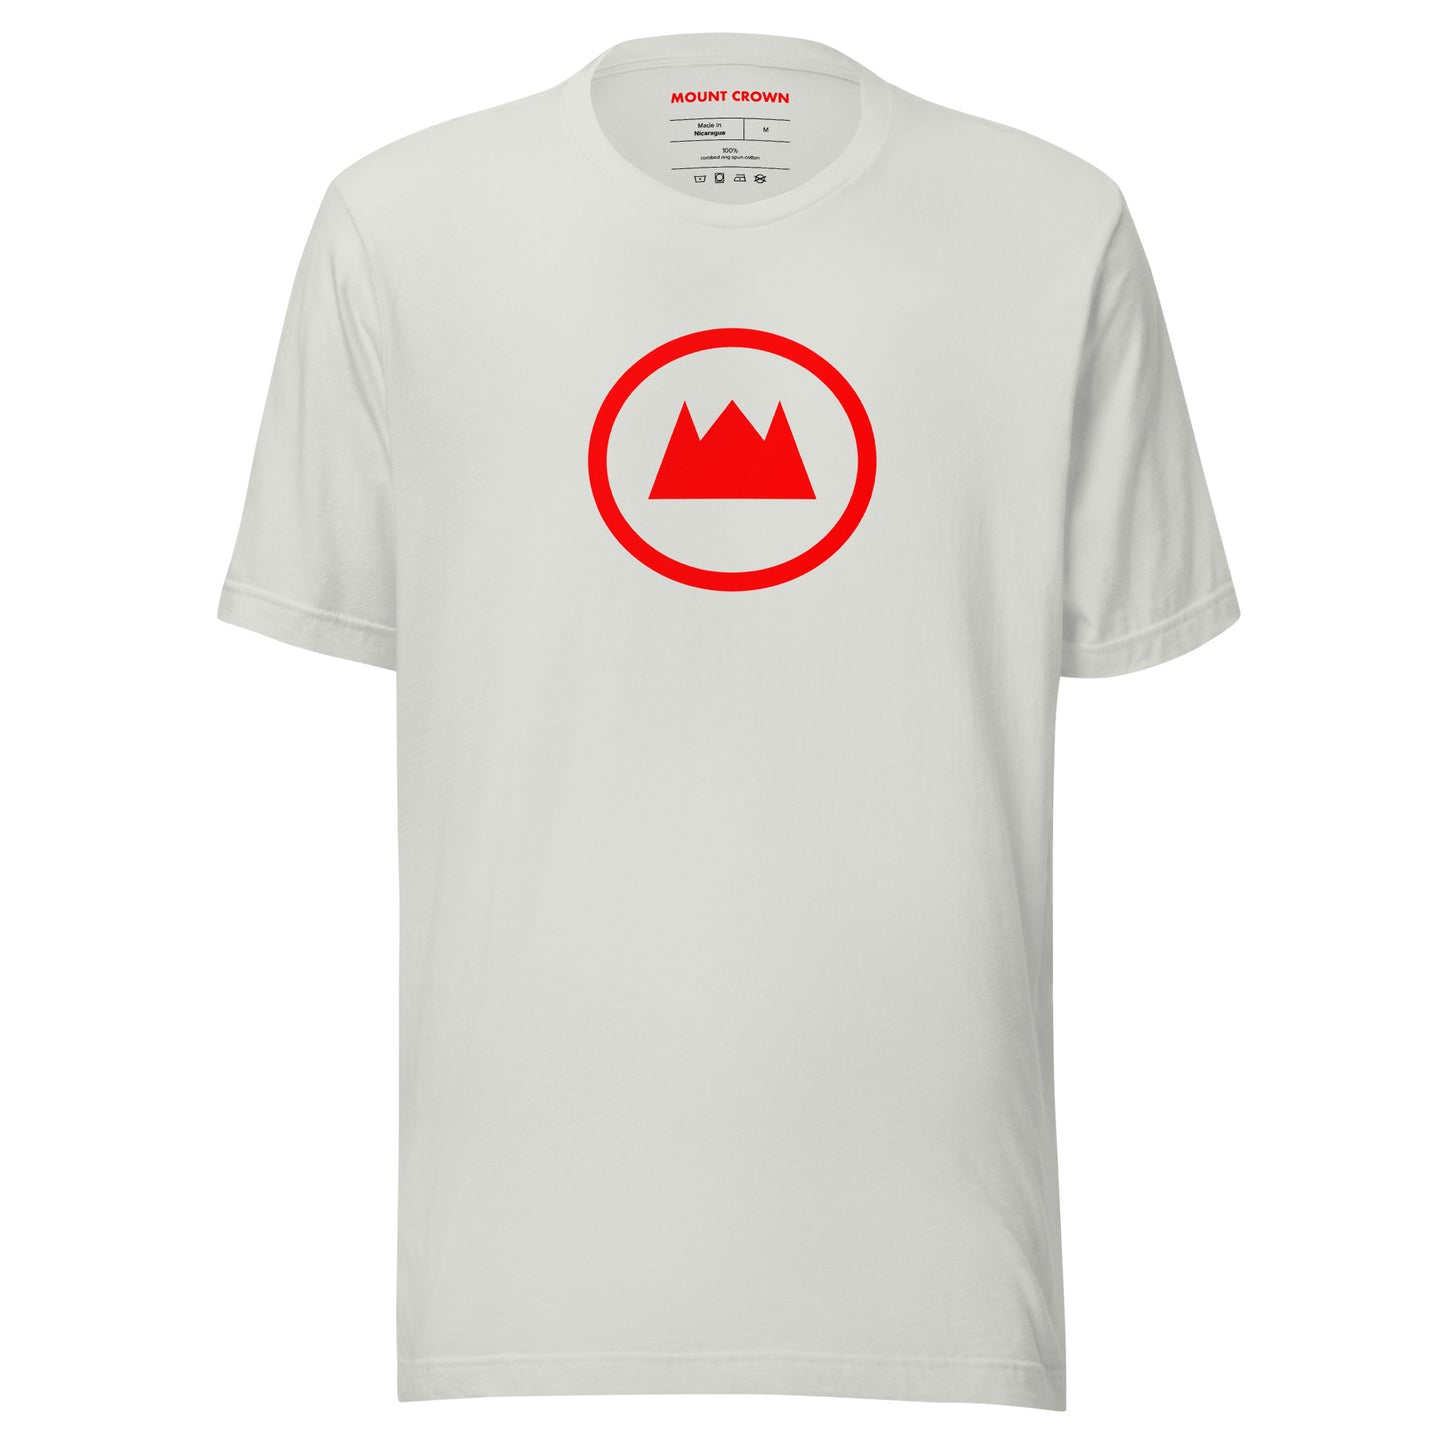 MOUNT CROWN (R) T-shirt